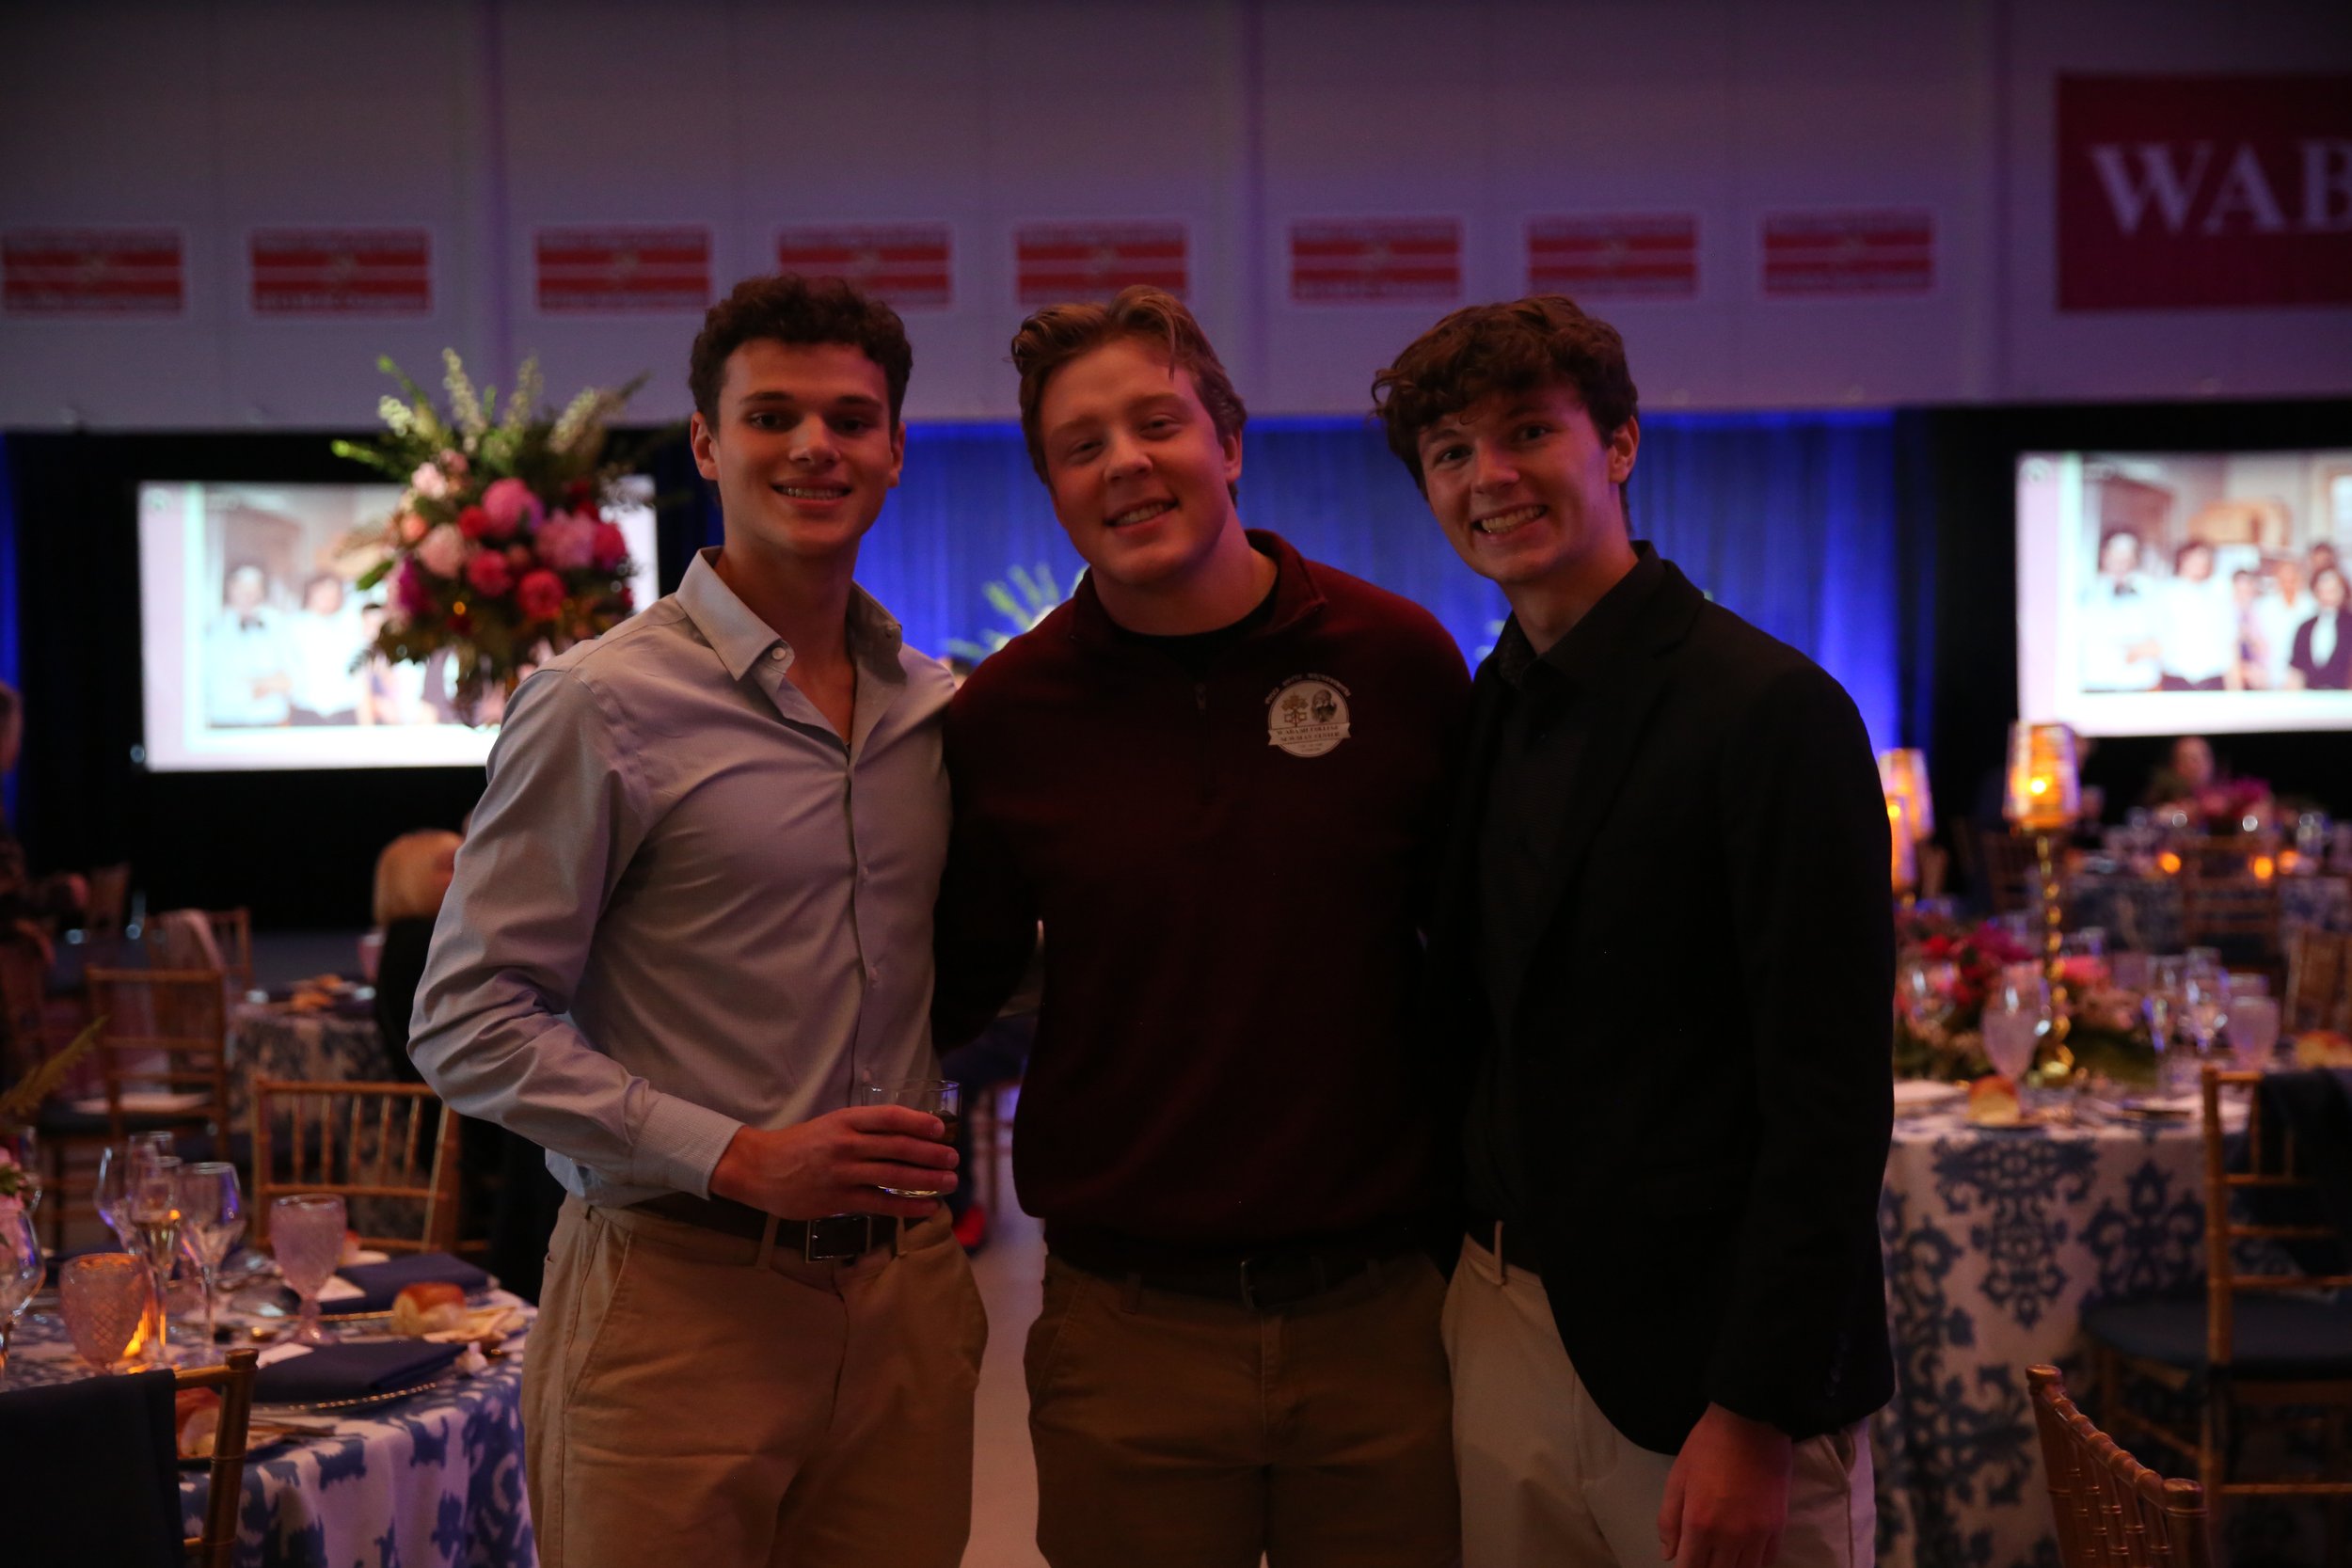  Lucas Carpenter '26, Garrett Dalton '26, and Chris Runyon '26 pause for a quick photo prior to the banquet. 